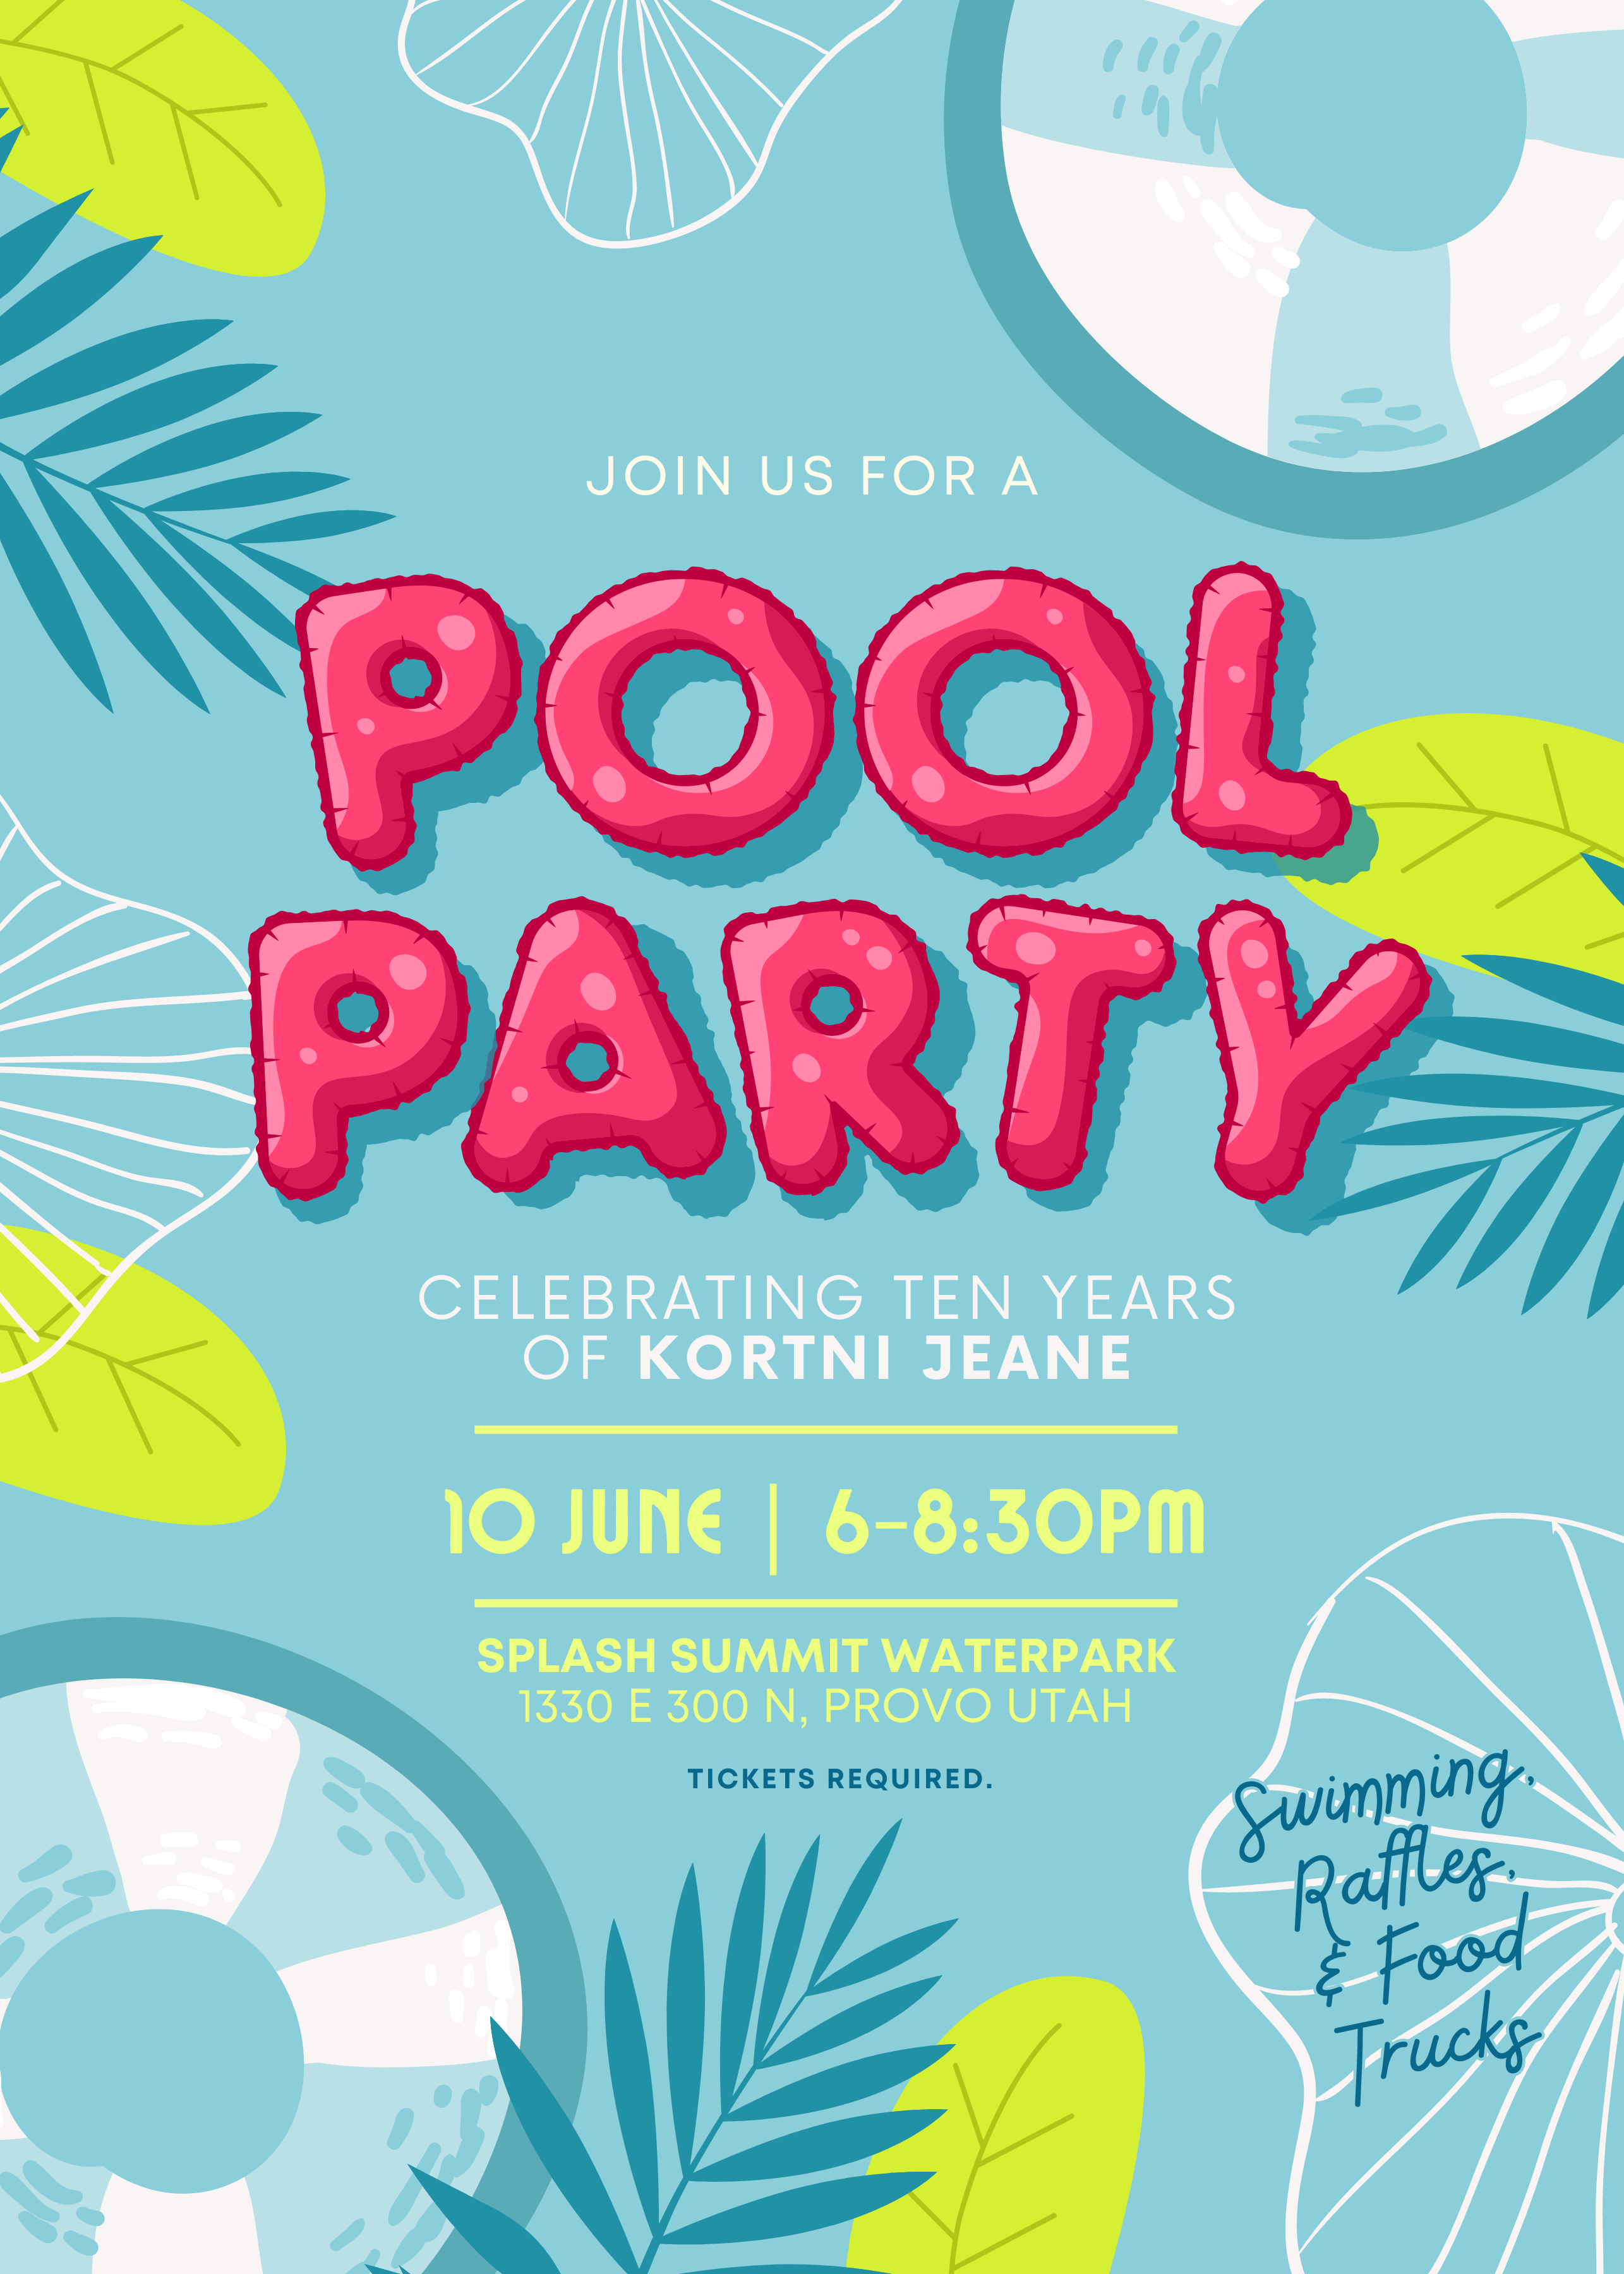 Kortni Jeane Pool Party: Ticket Reservations